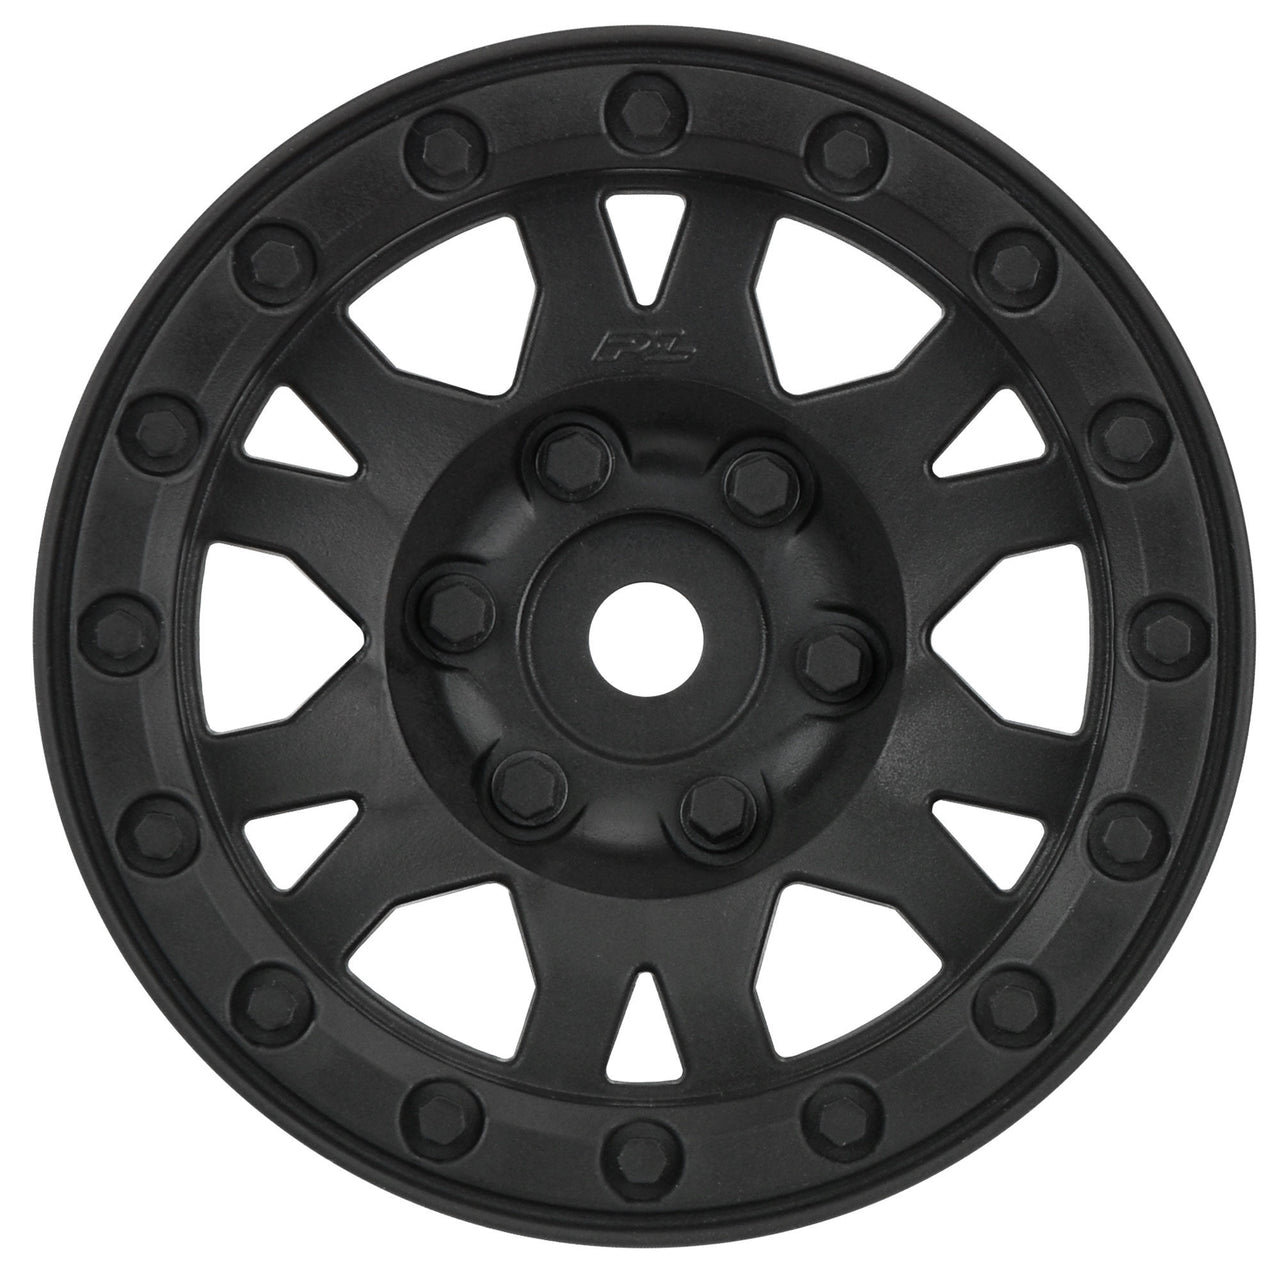 PRO276903 1/10 Impulse Front/Rear 1.9" 12mm Rock Crawler Wheels (2) Black